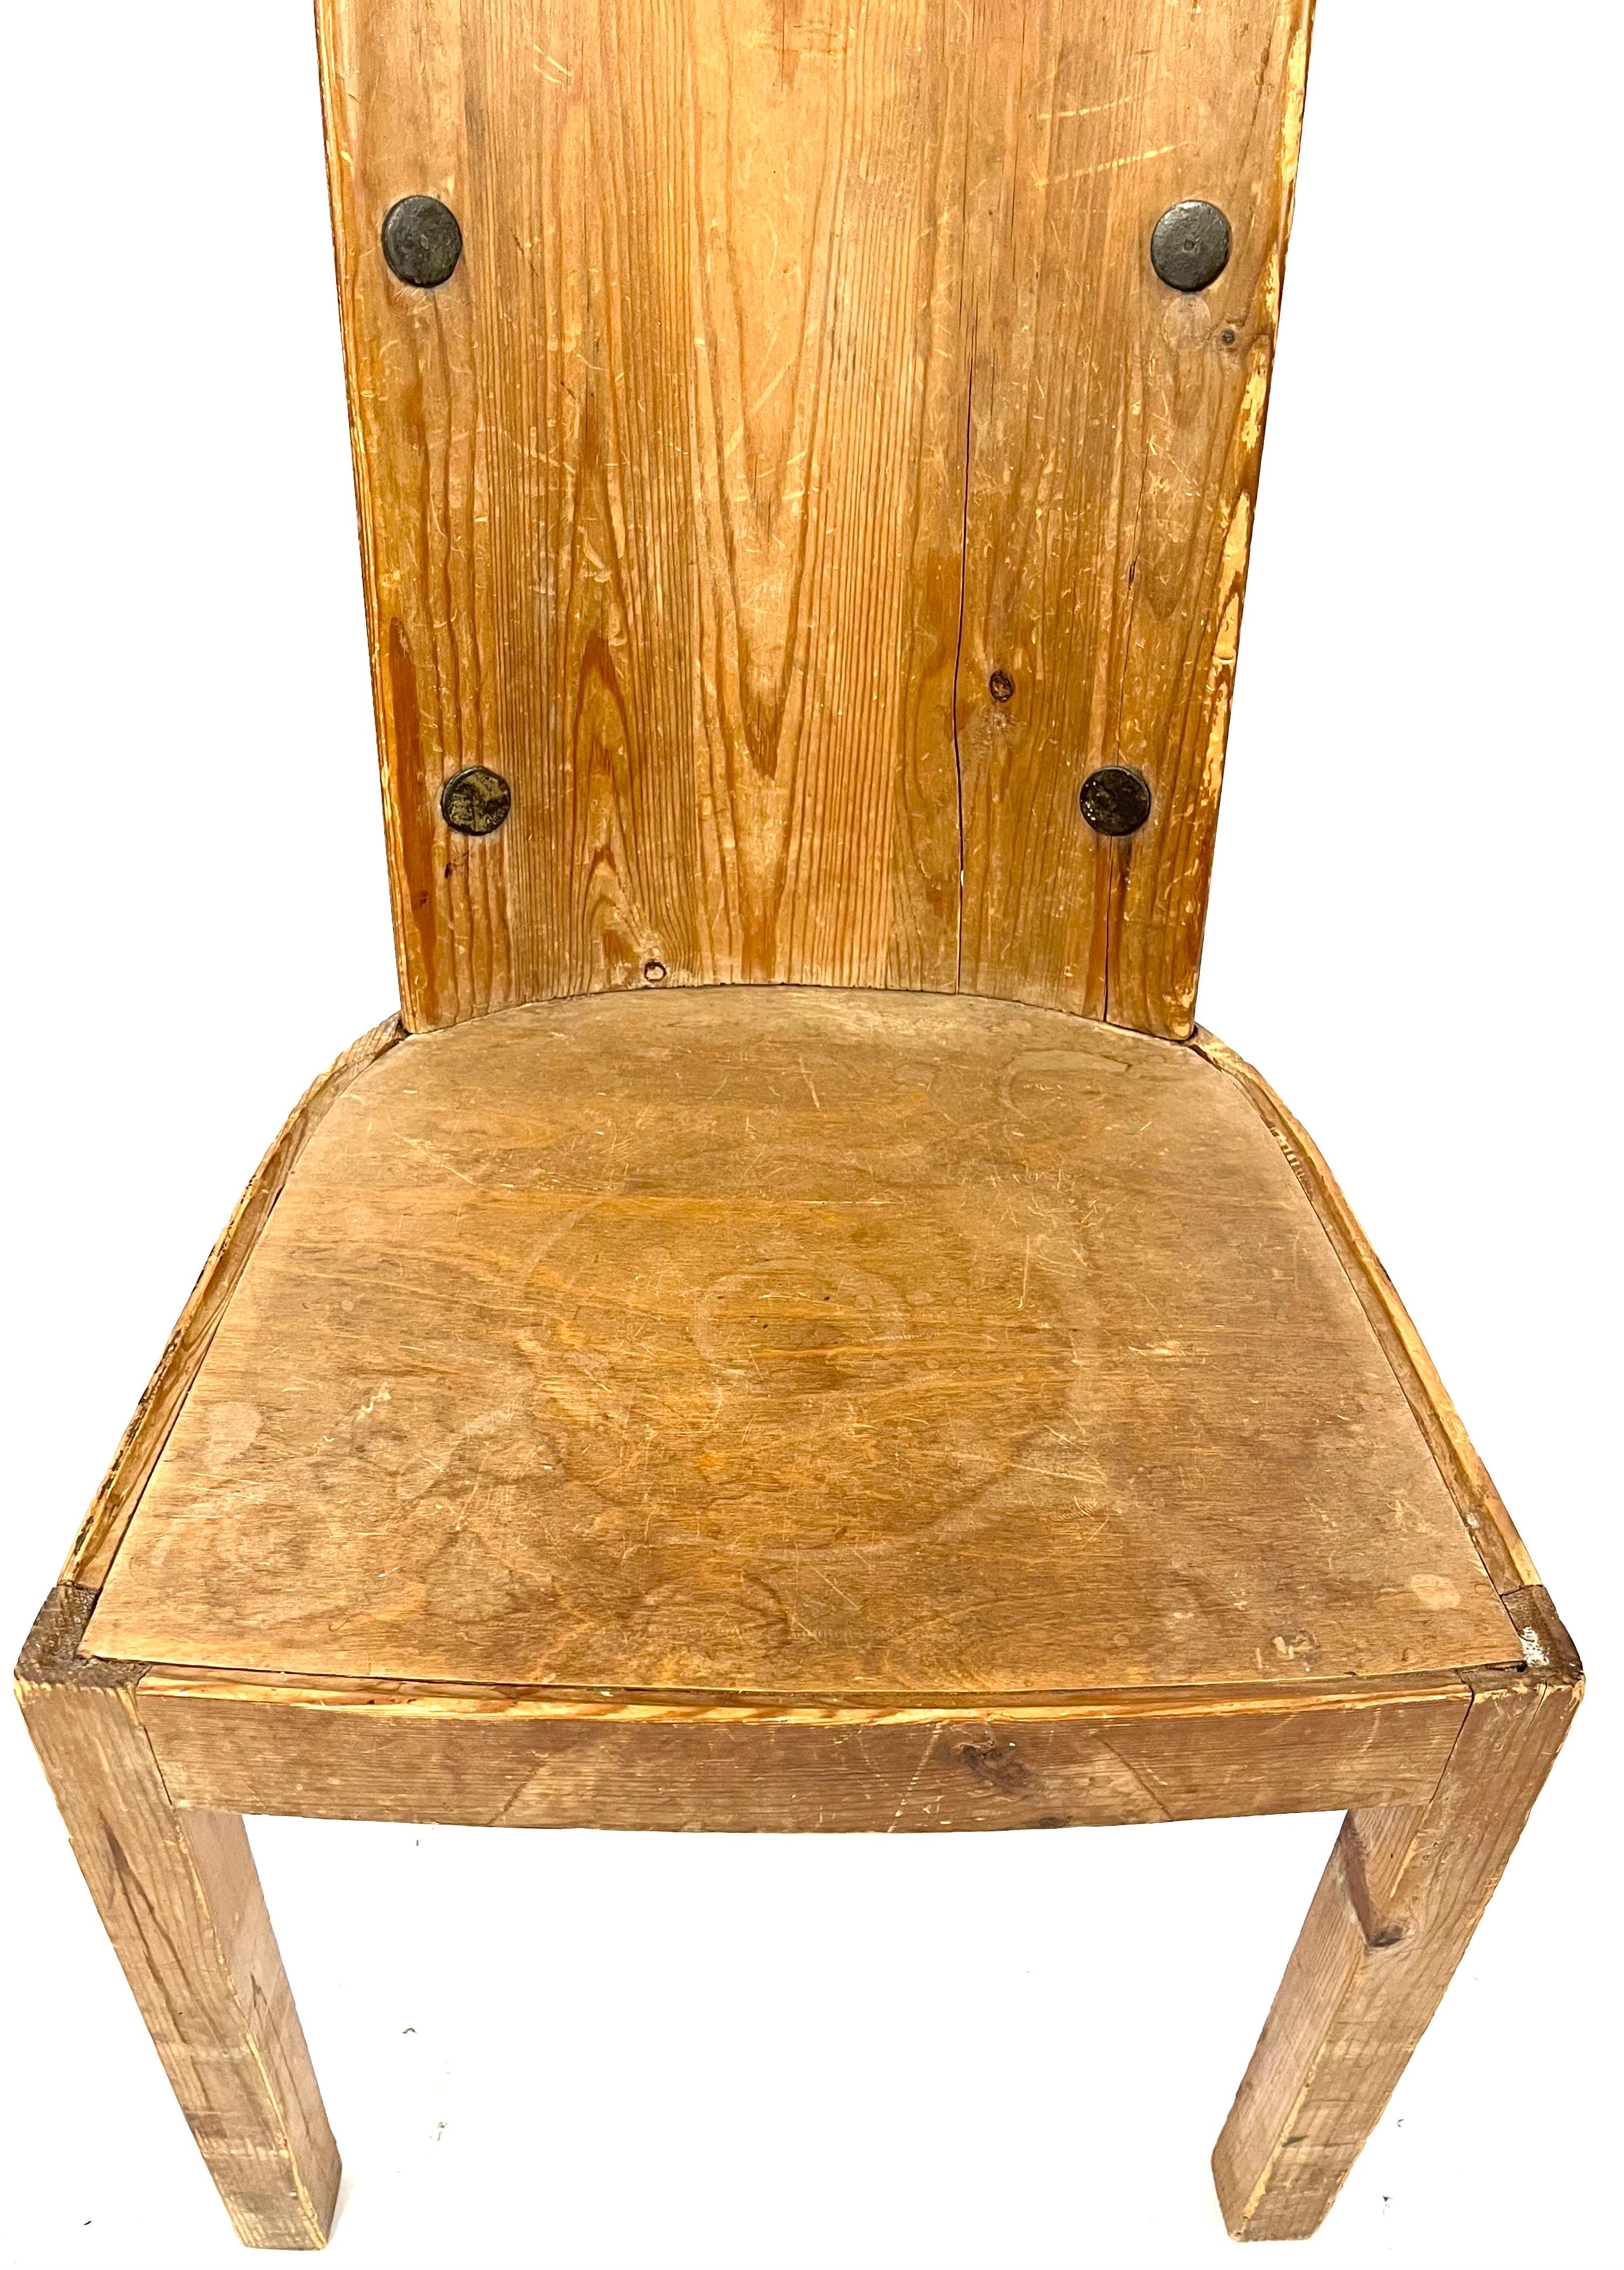 Lovö chair by Axel Einar Hjort for Nordiska Kompaniet 1930s For Sale 1